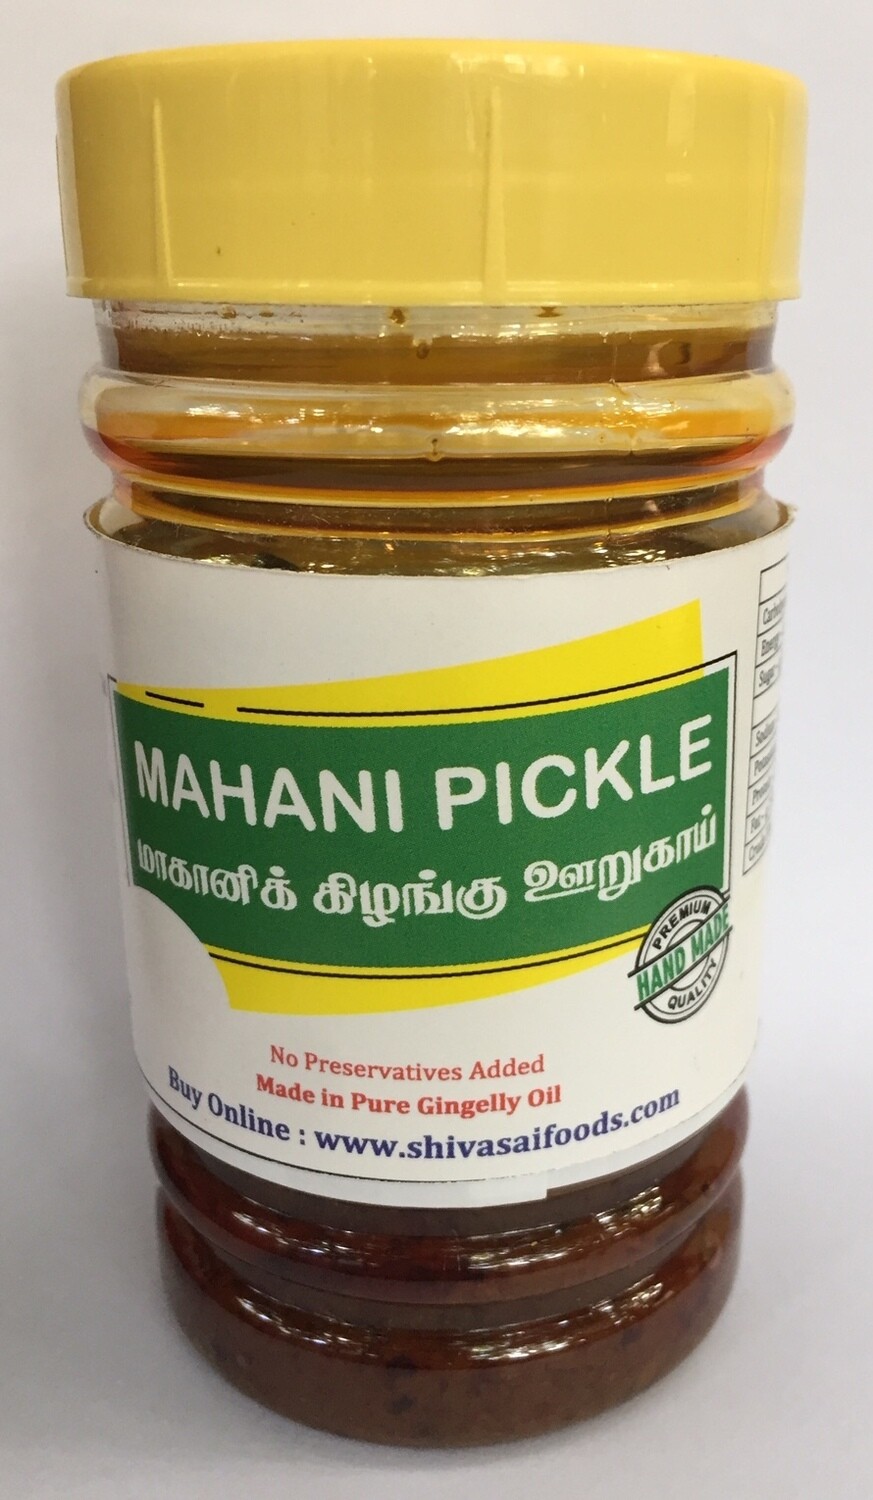 ShivaSai - Mahani Pickle - 200g - MRP 175